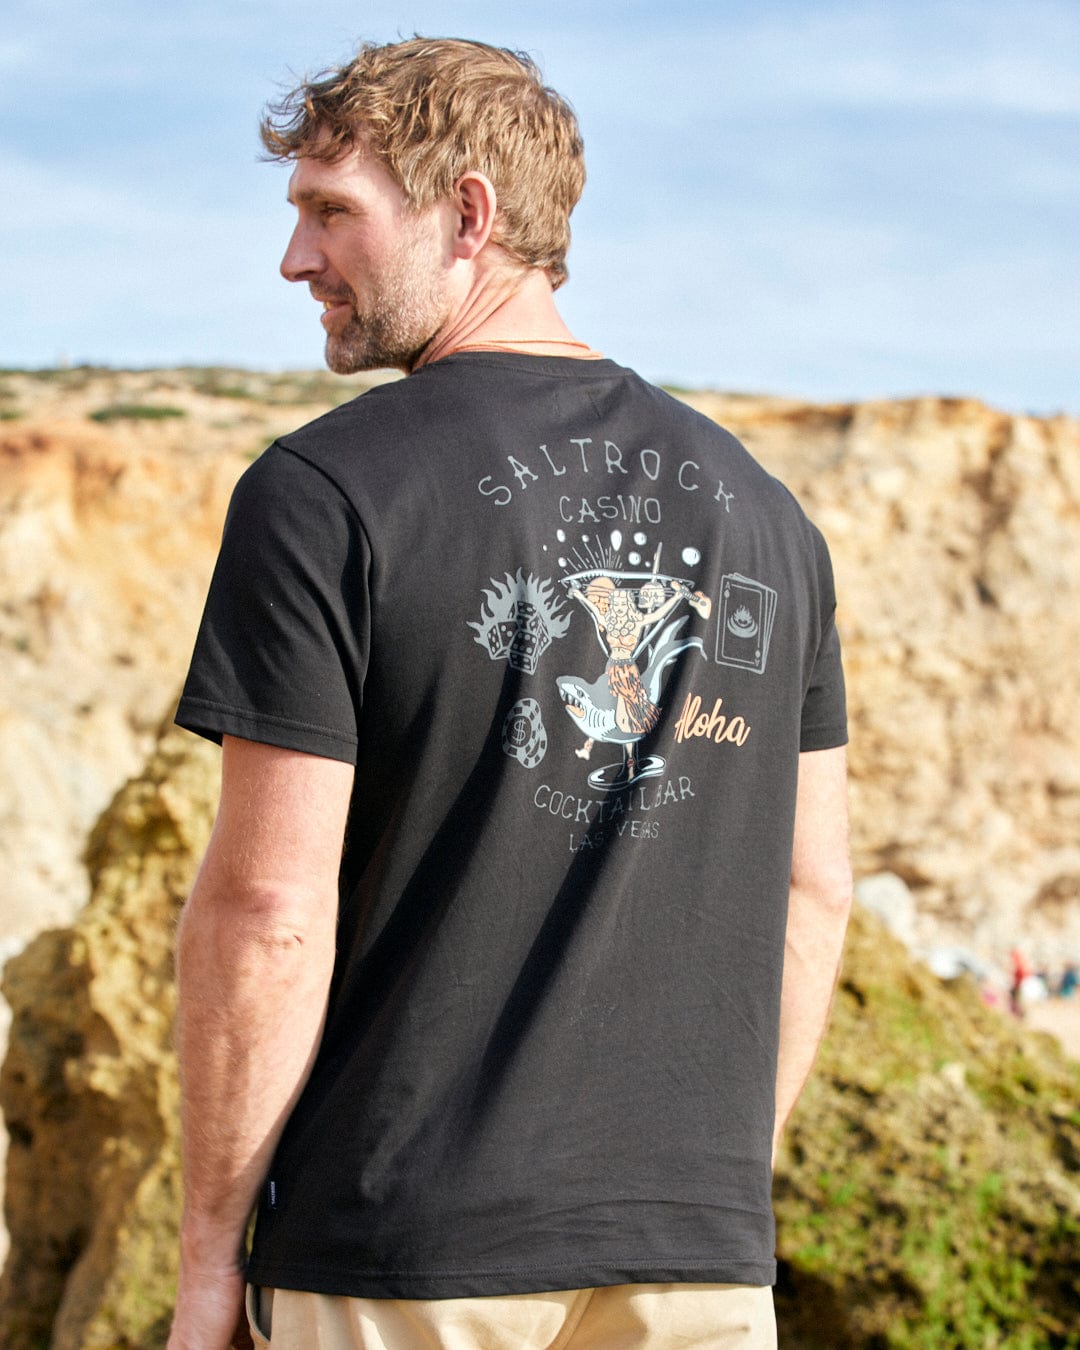 A man wearing a Saltrock Vegas Cocktail - Mens Short Sleeve T-Shirt in Black is standing on a rocky beach.